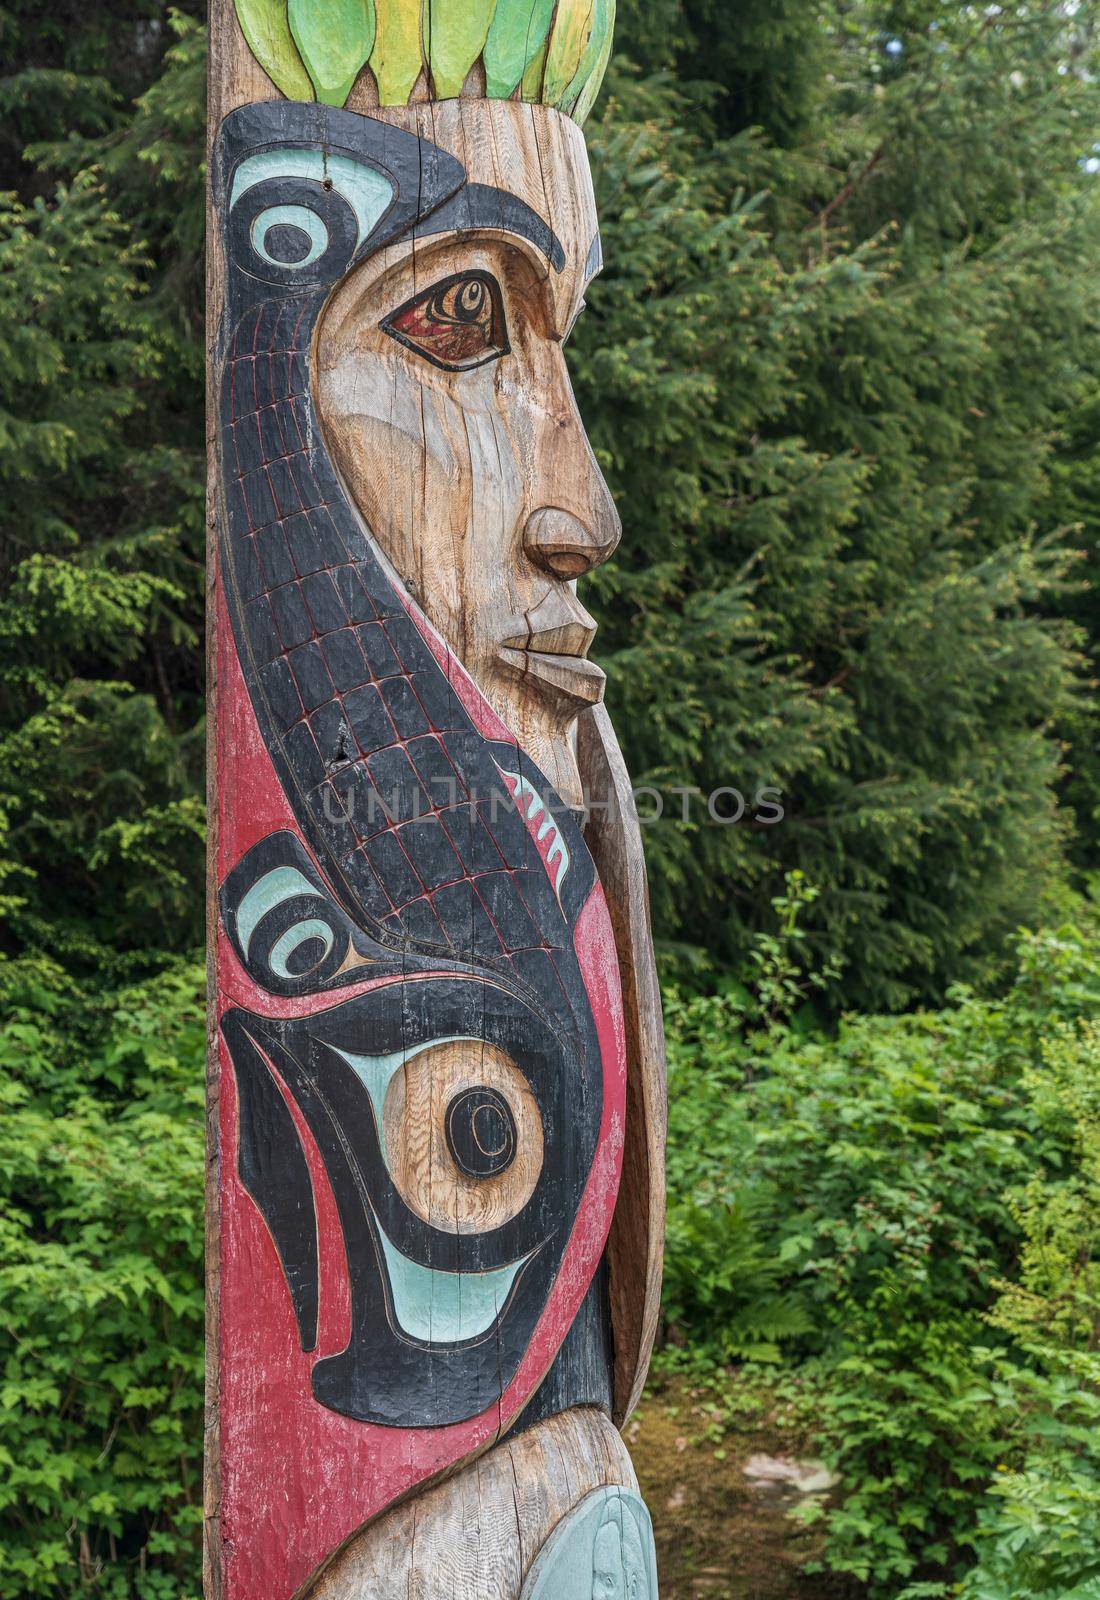 Sitka, AK - 8 June 2022: Totem poles displayed in the Sitka National Historical park in Alaska